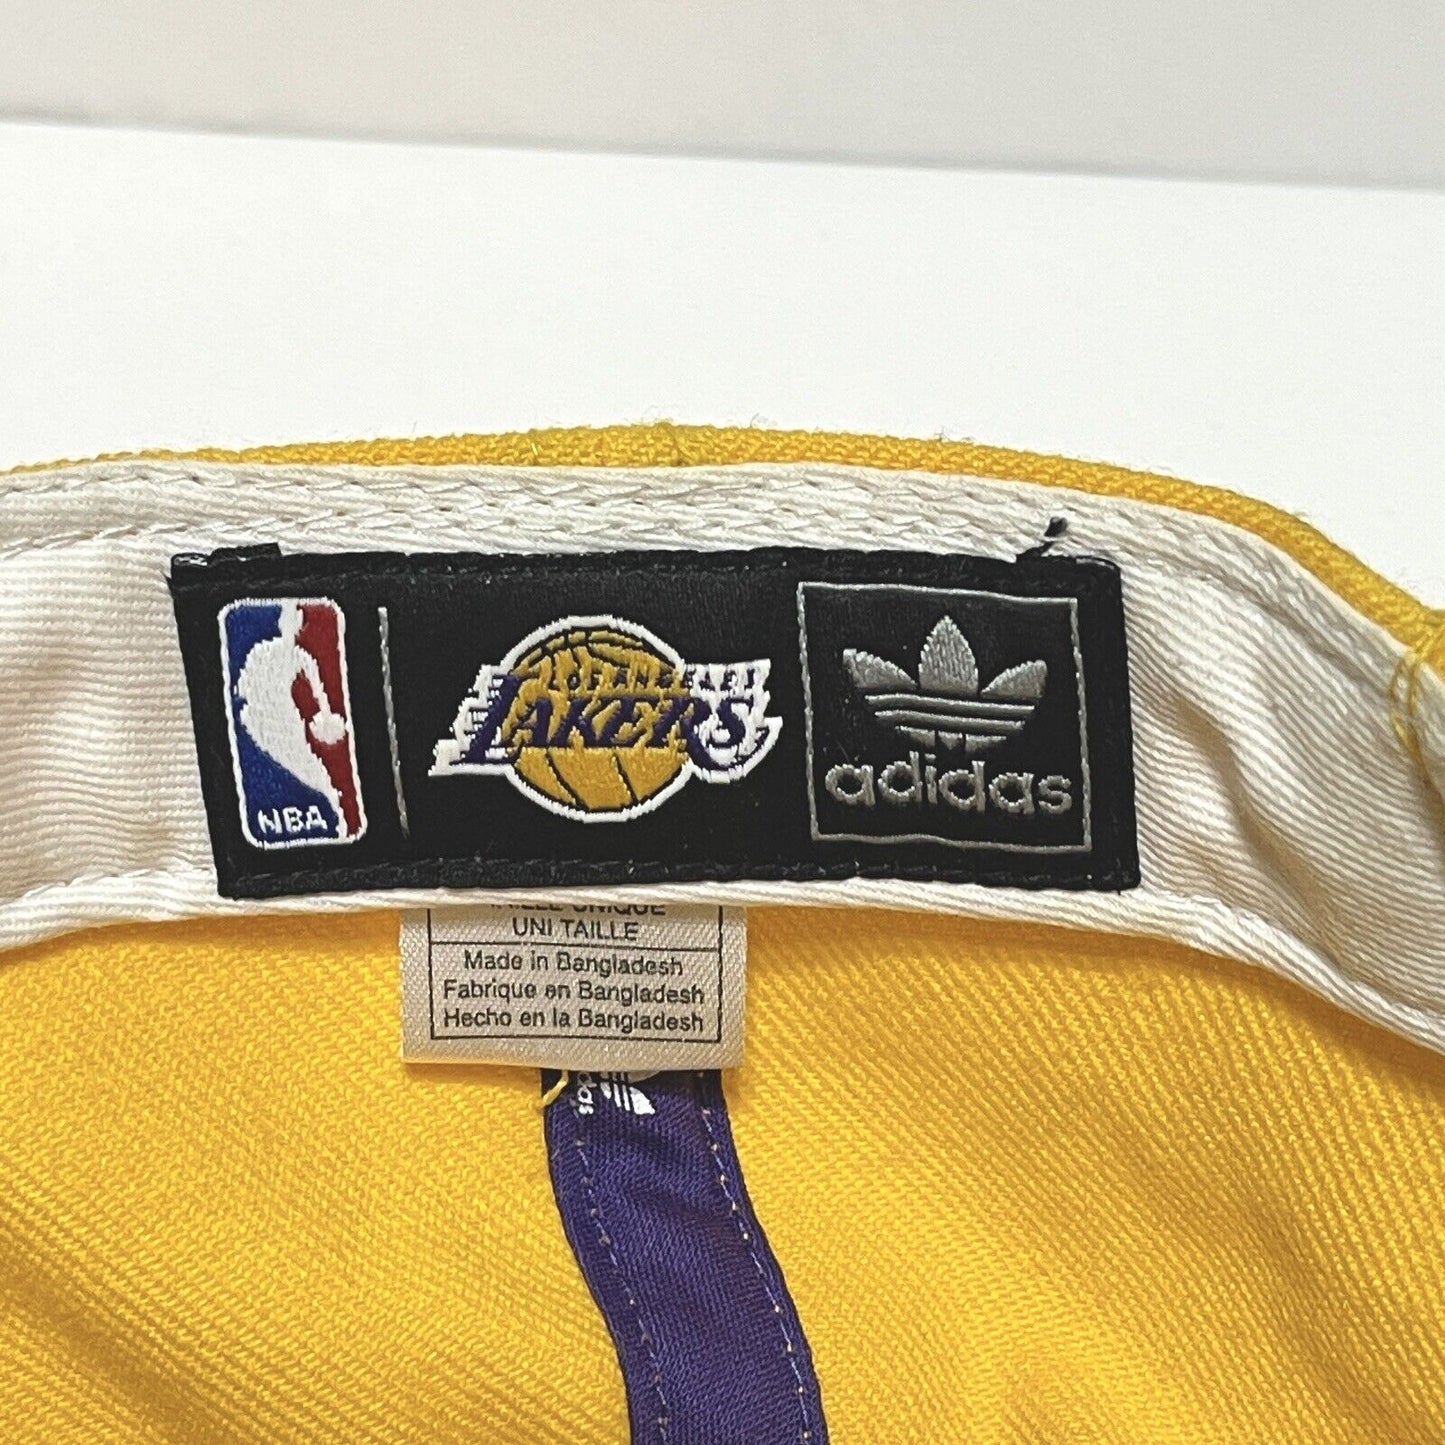 Los Angeles Lakers Snapback Hat Adidas NBA LA Basketball Mens Wool Blend Cap